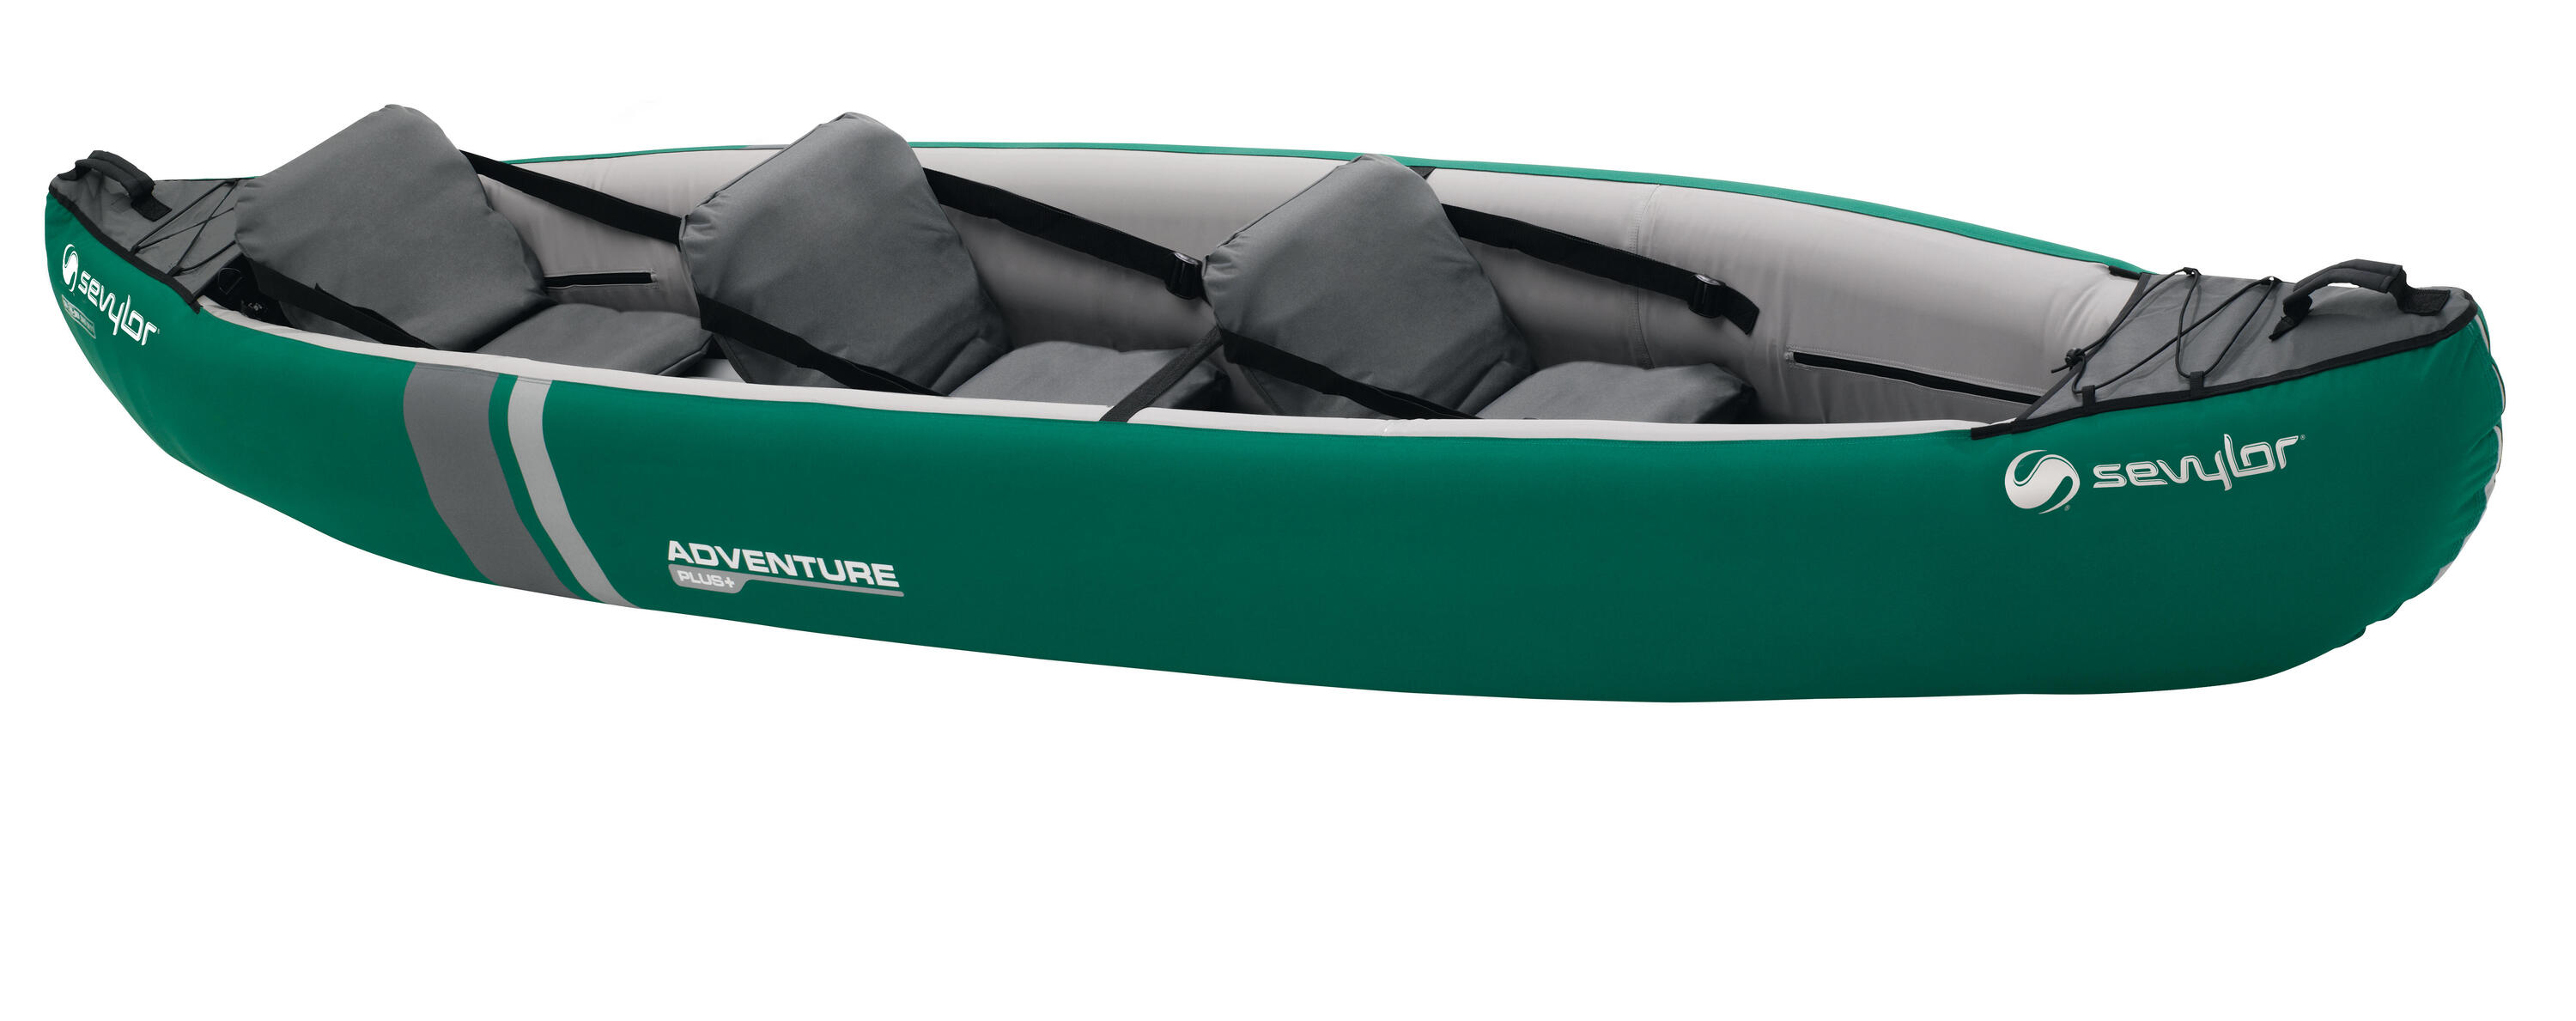 SEVYLOR Adventure Plus 3 Person Inflatable Canoe/kayak - Green